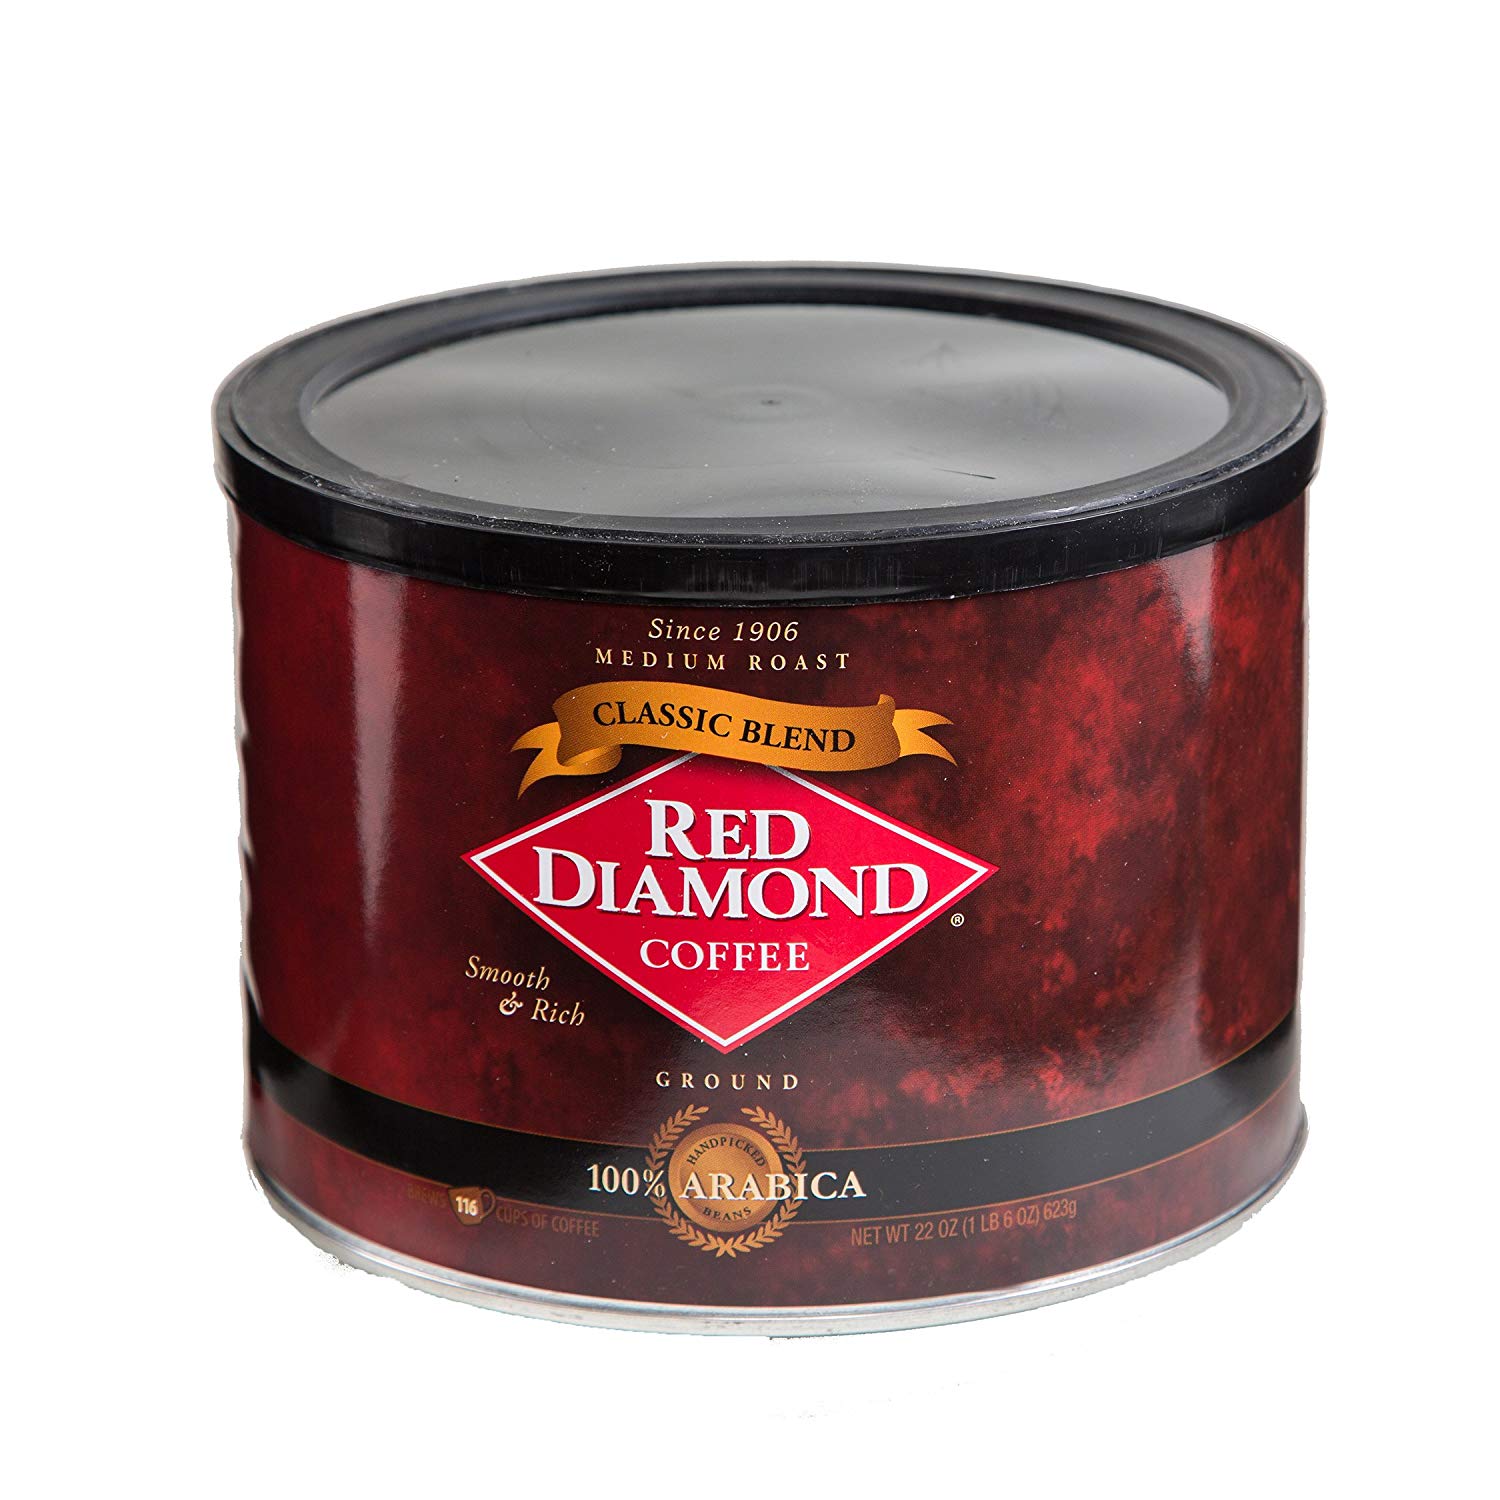 Red Diamond Coffee Logo - Amazon.com : Red Diamond Classic Blend Ground Coffee, 22 Ounce Can ...